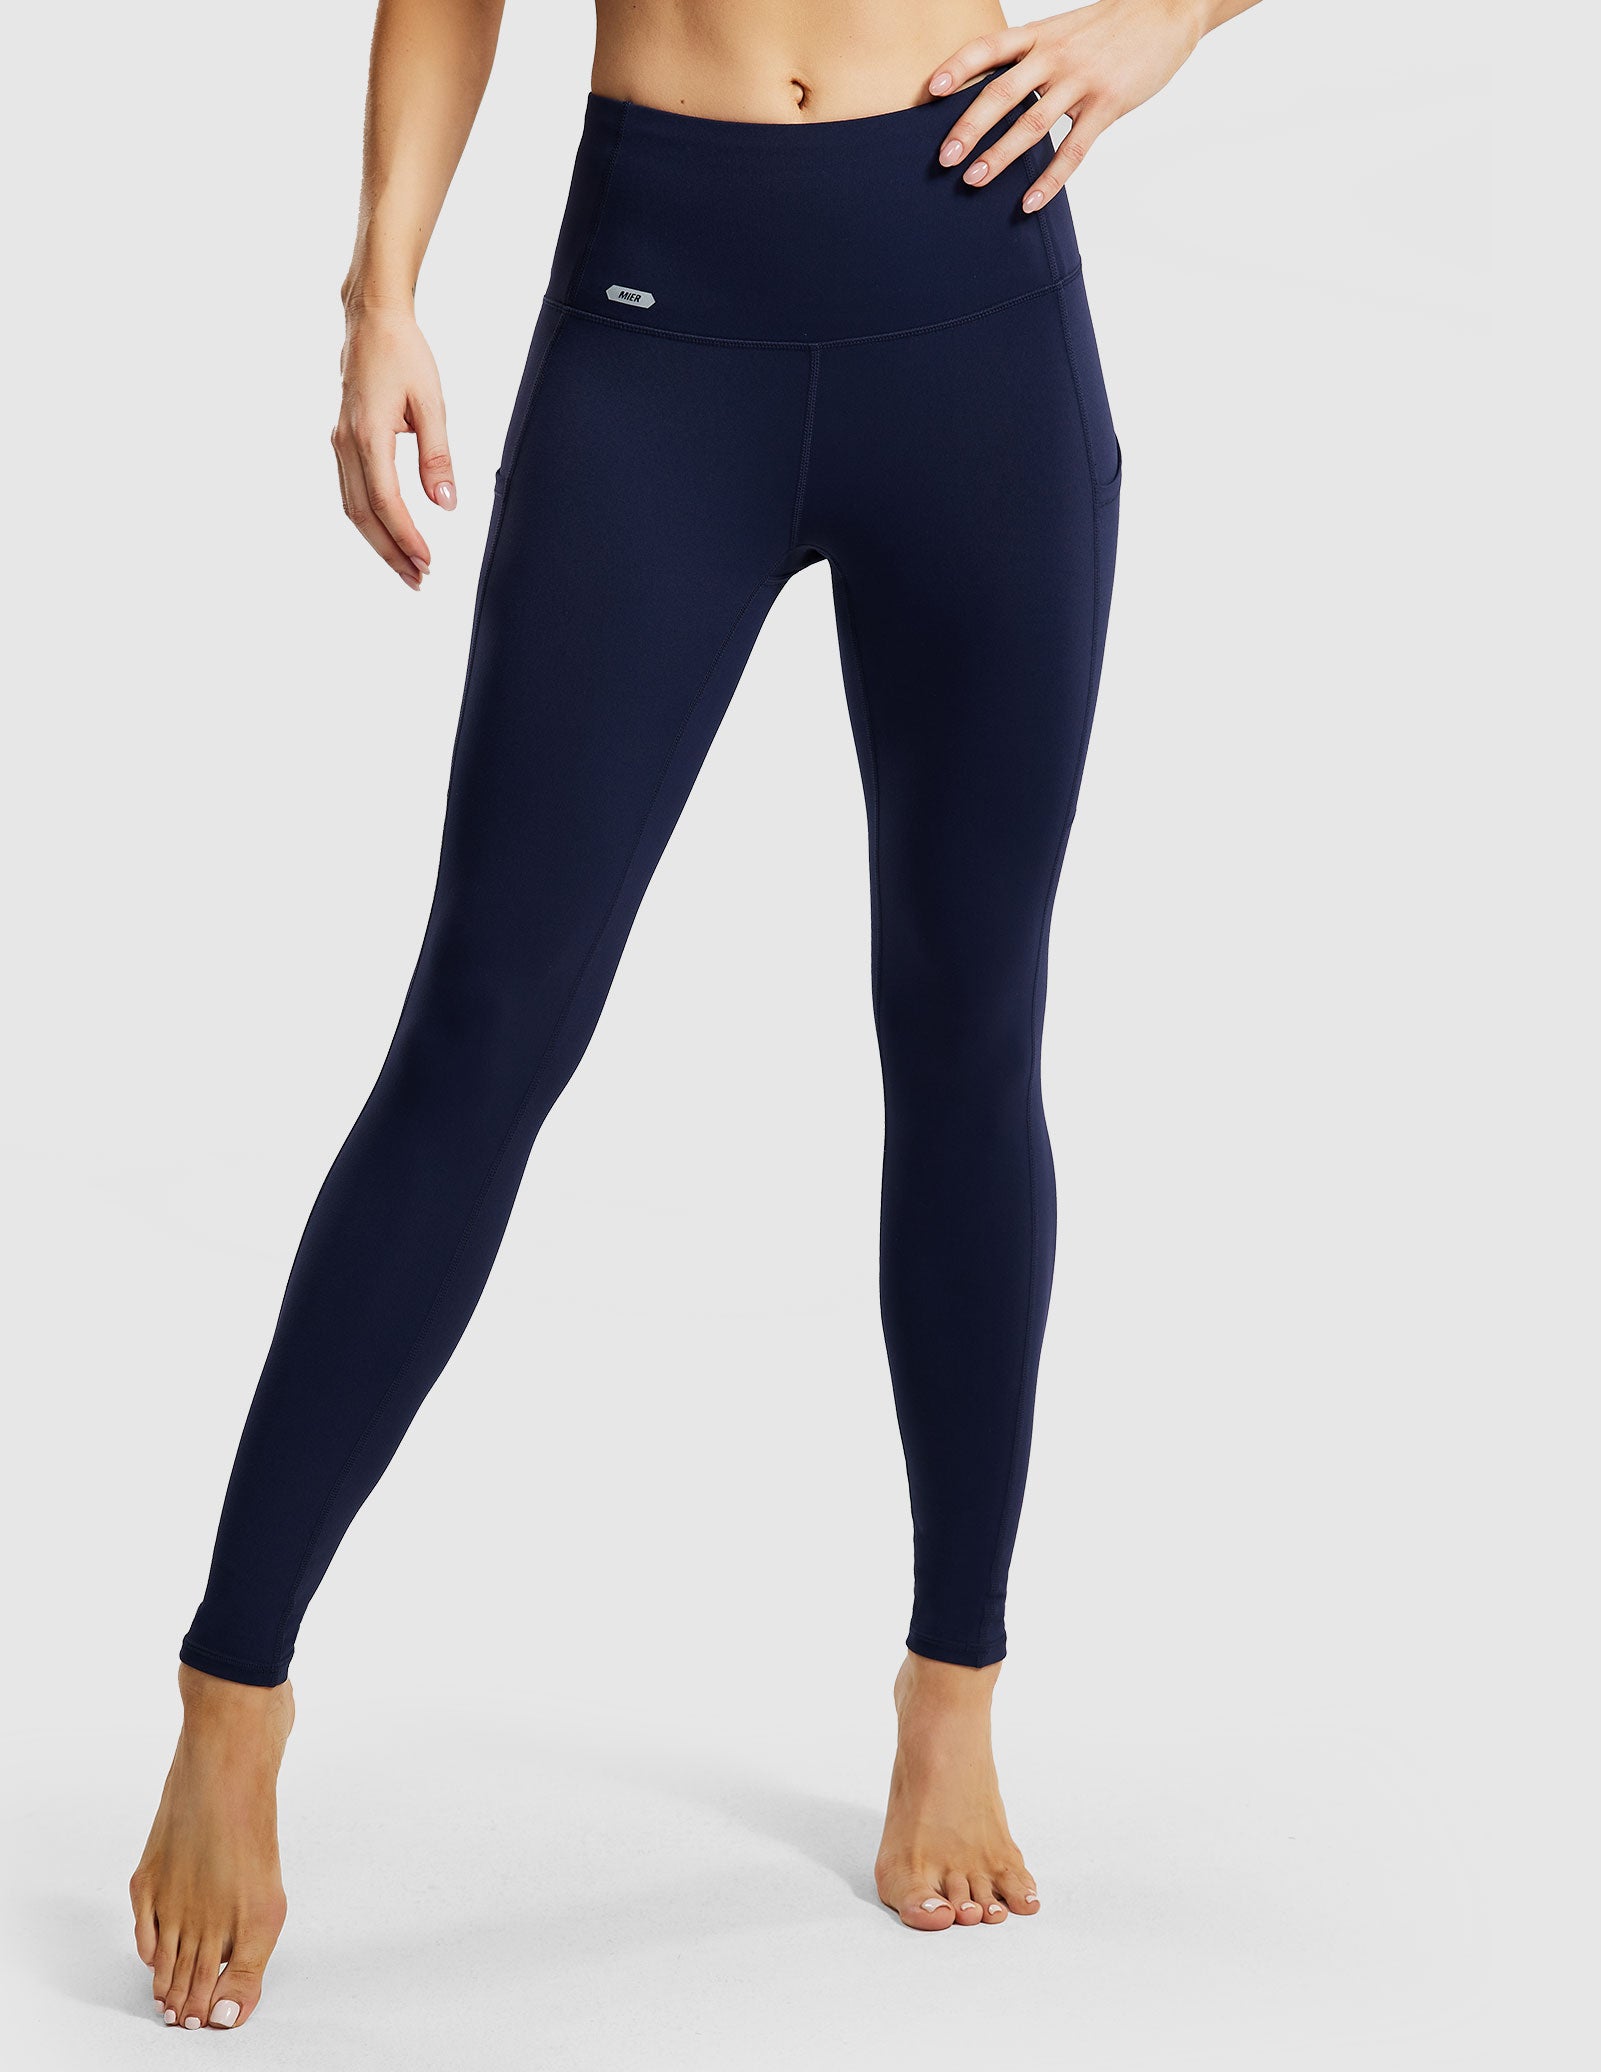 Women's High Waisted Yoga Leggings Workout Pants - Dark Blue / S